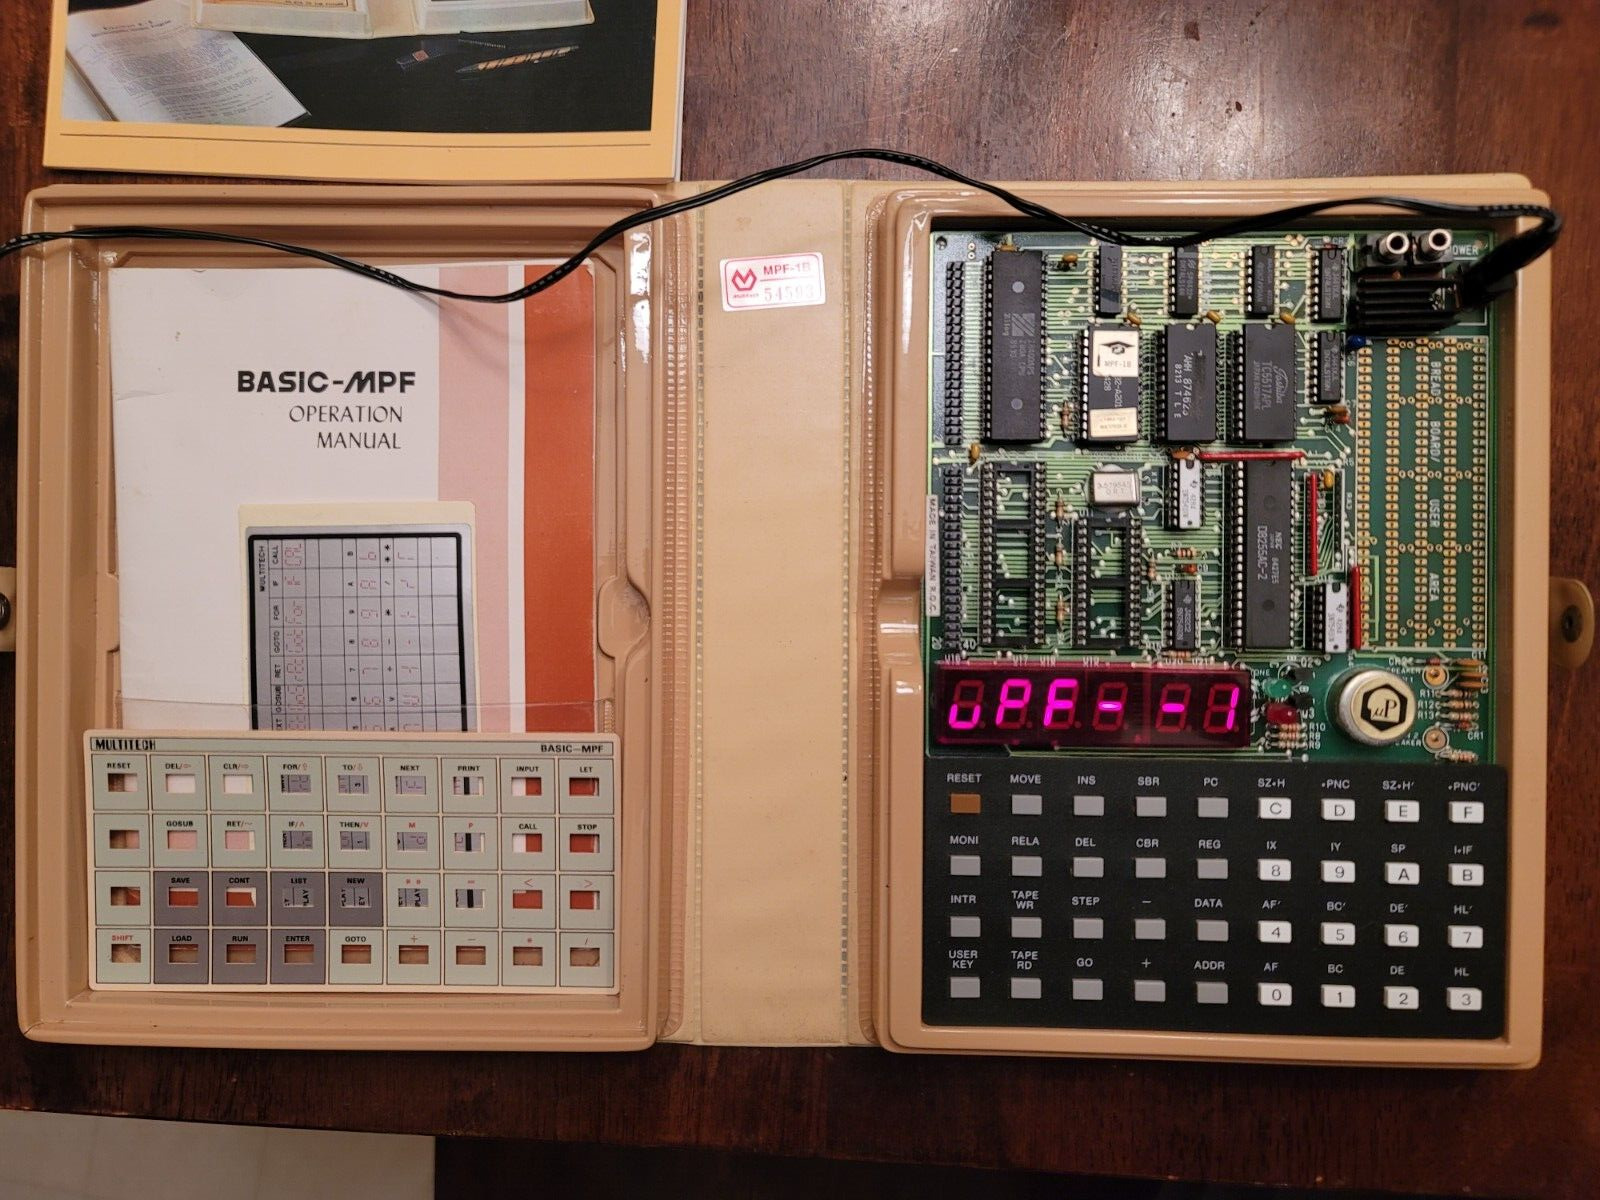 1981 Vintage Computer Micro Professor MPF-I with 4kb BASIC Interpreter, Manuals